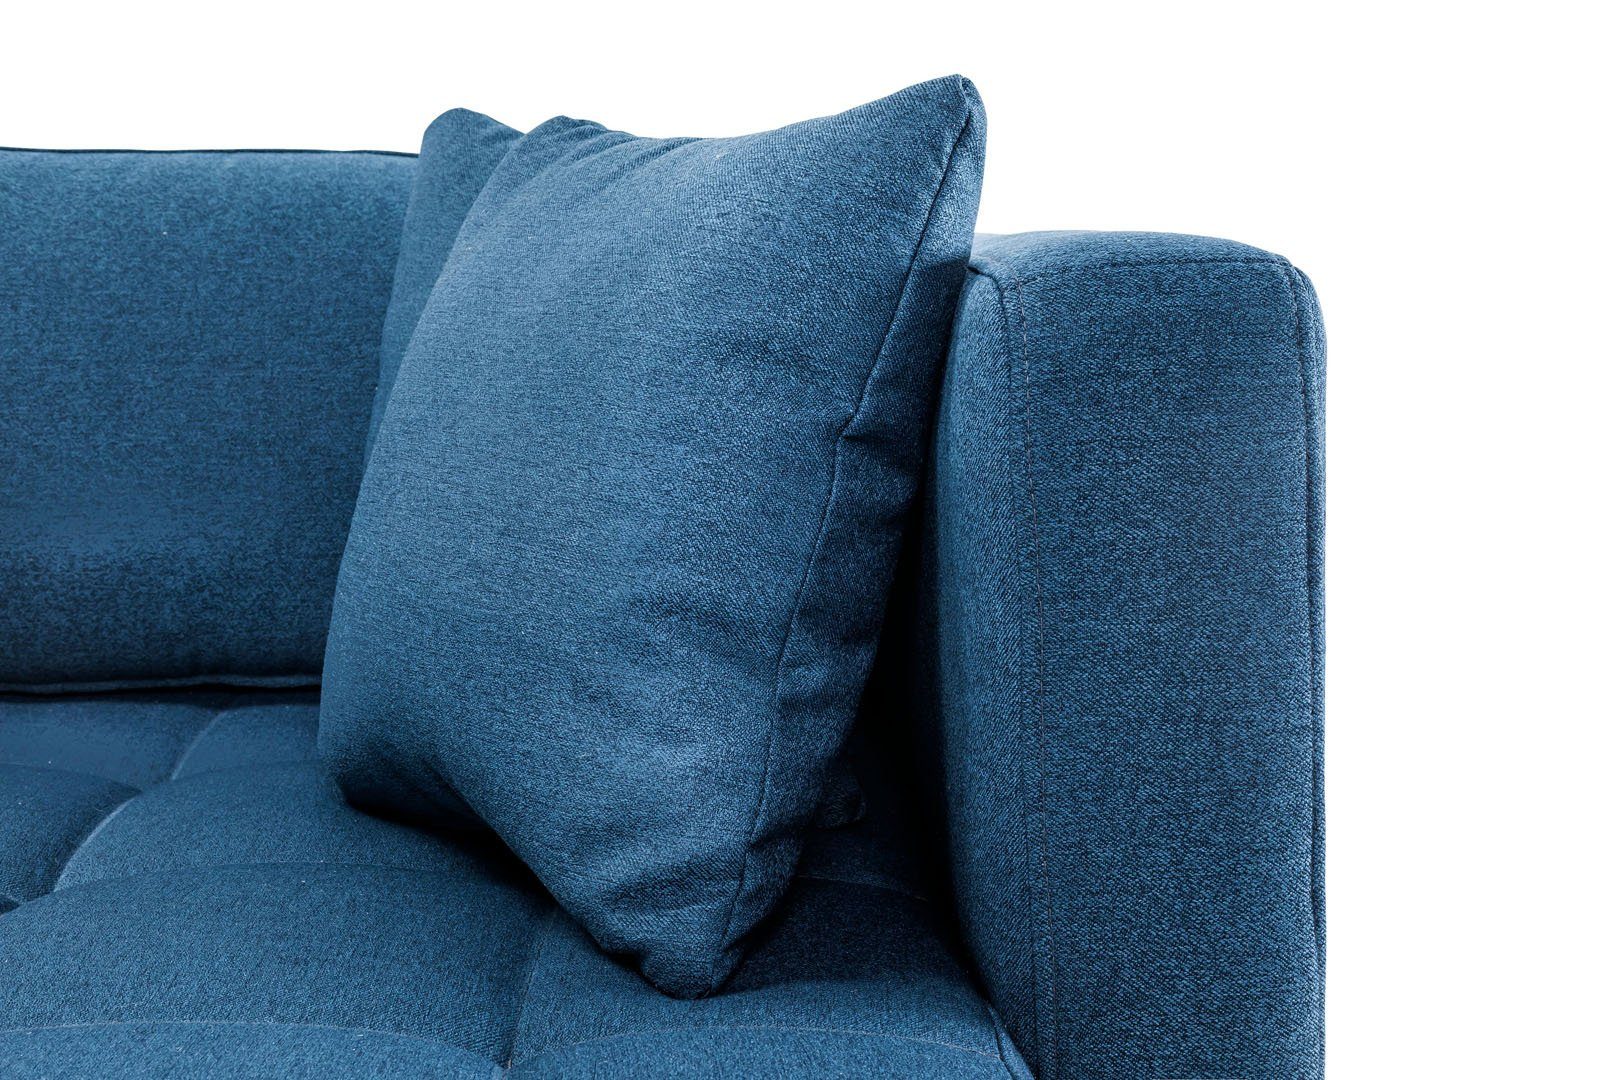 Sofa Cali ebuy24 Blau oder rechts Chaiselongsofa mit links gewendet